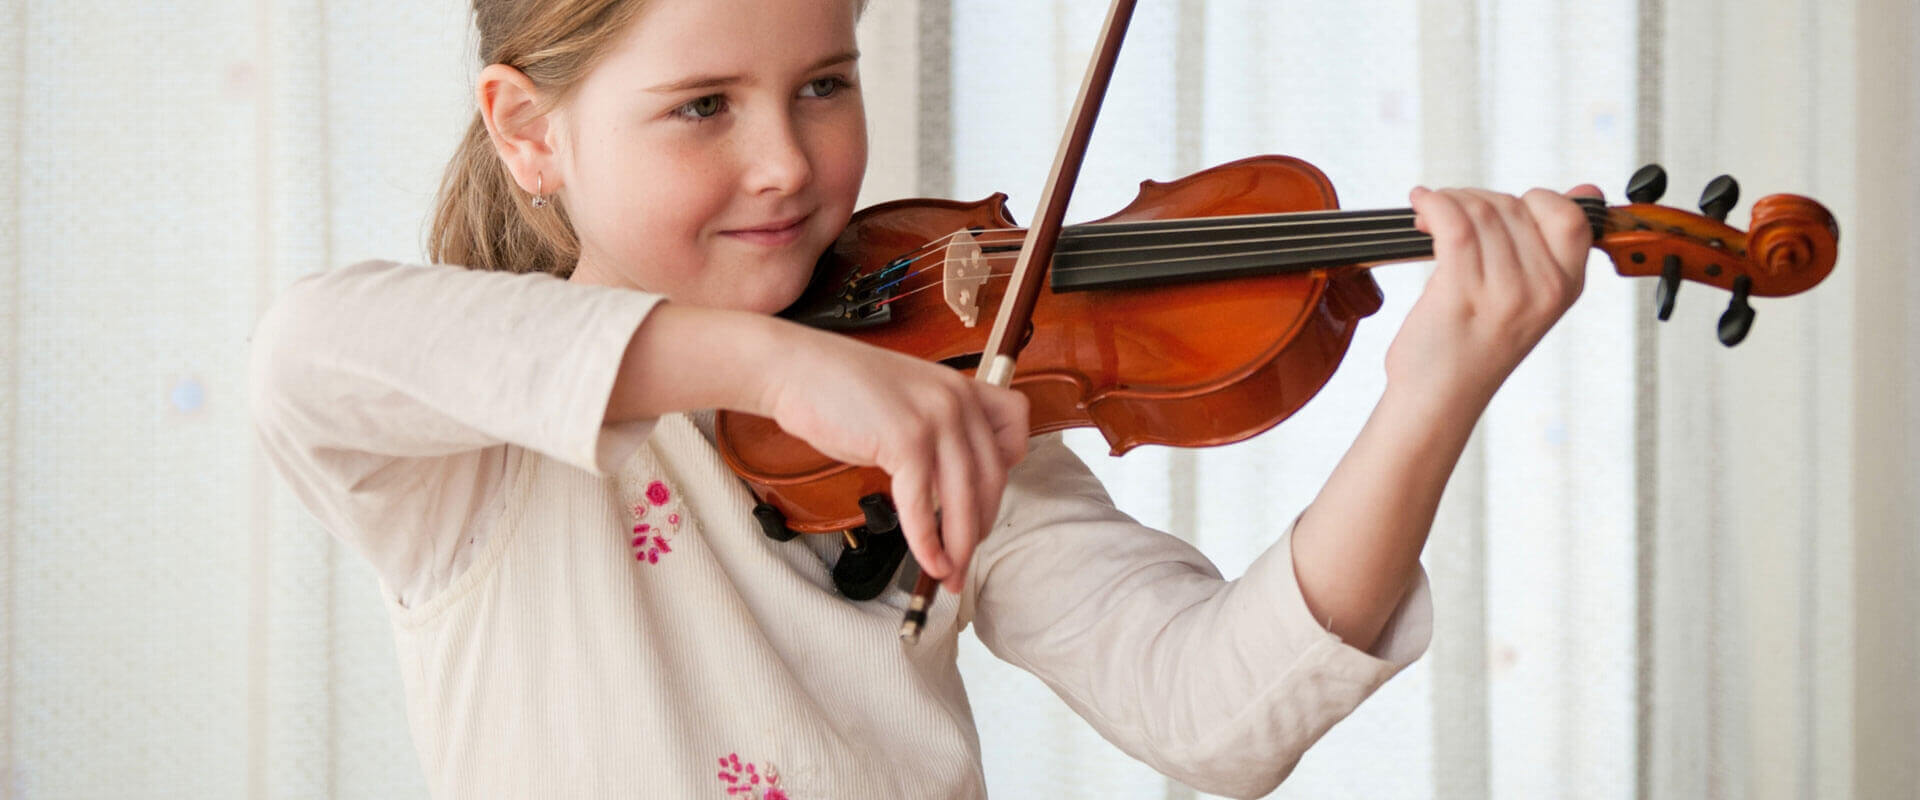 Violin Lessons Prairieview, IL